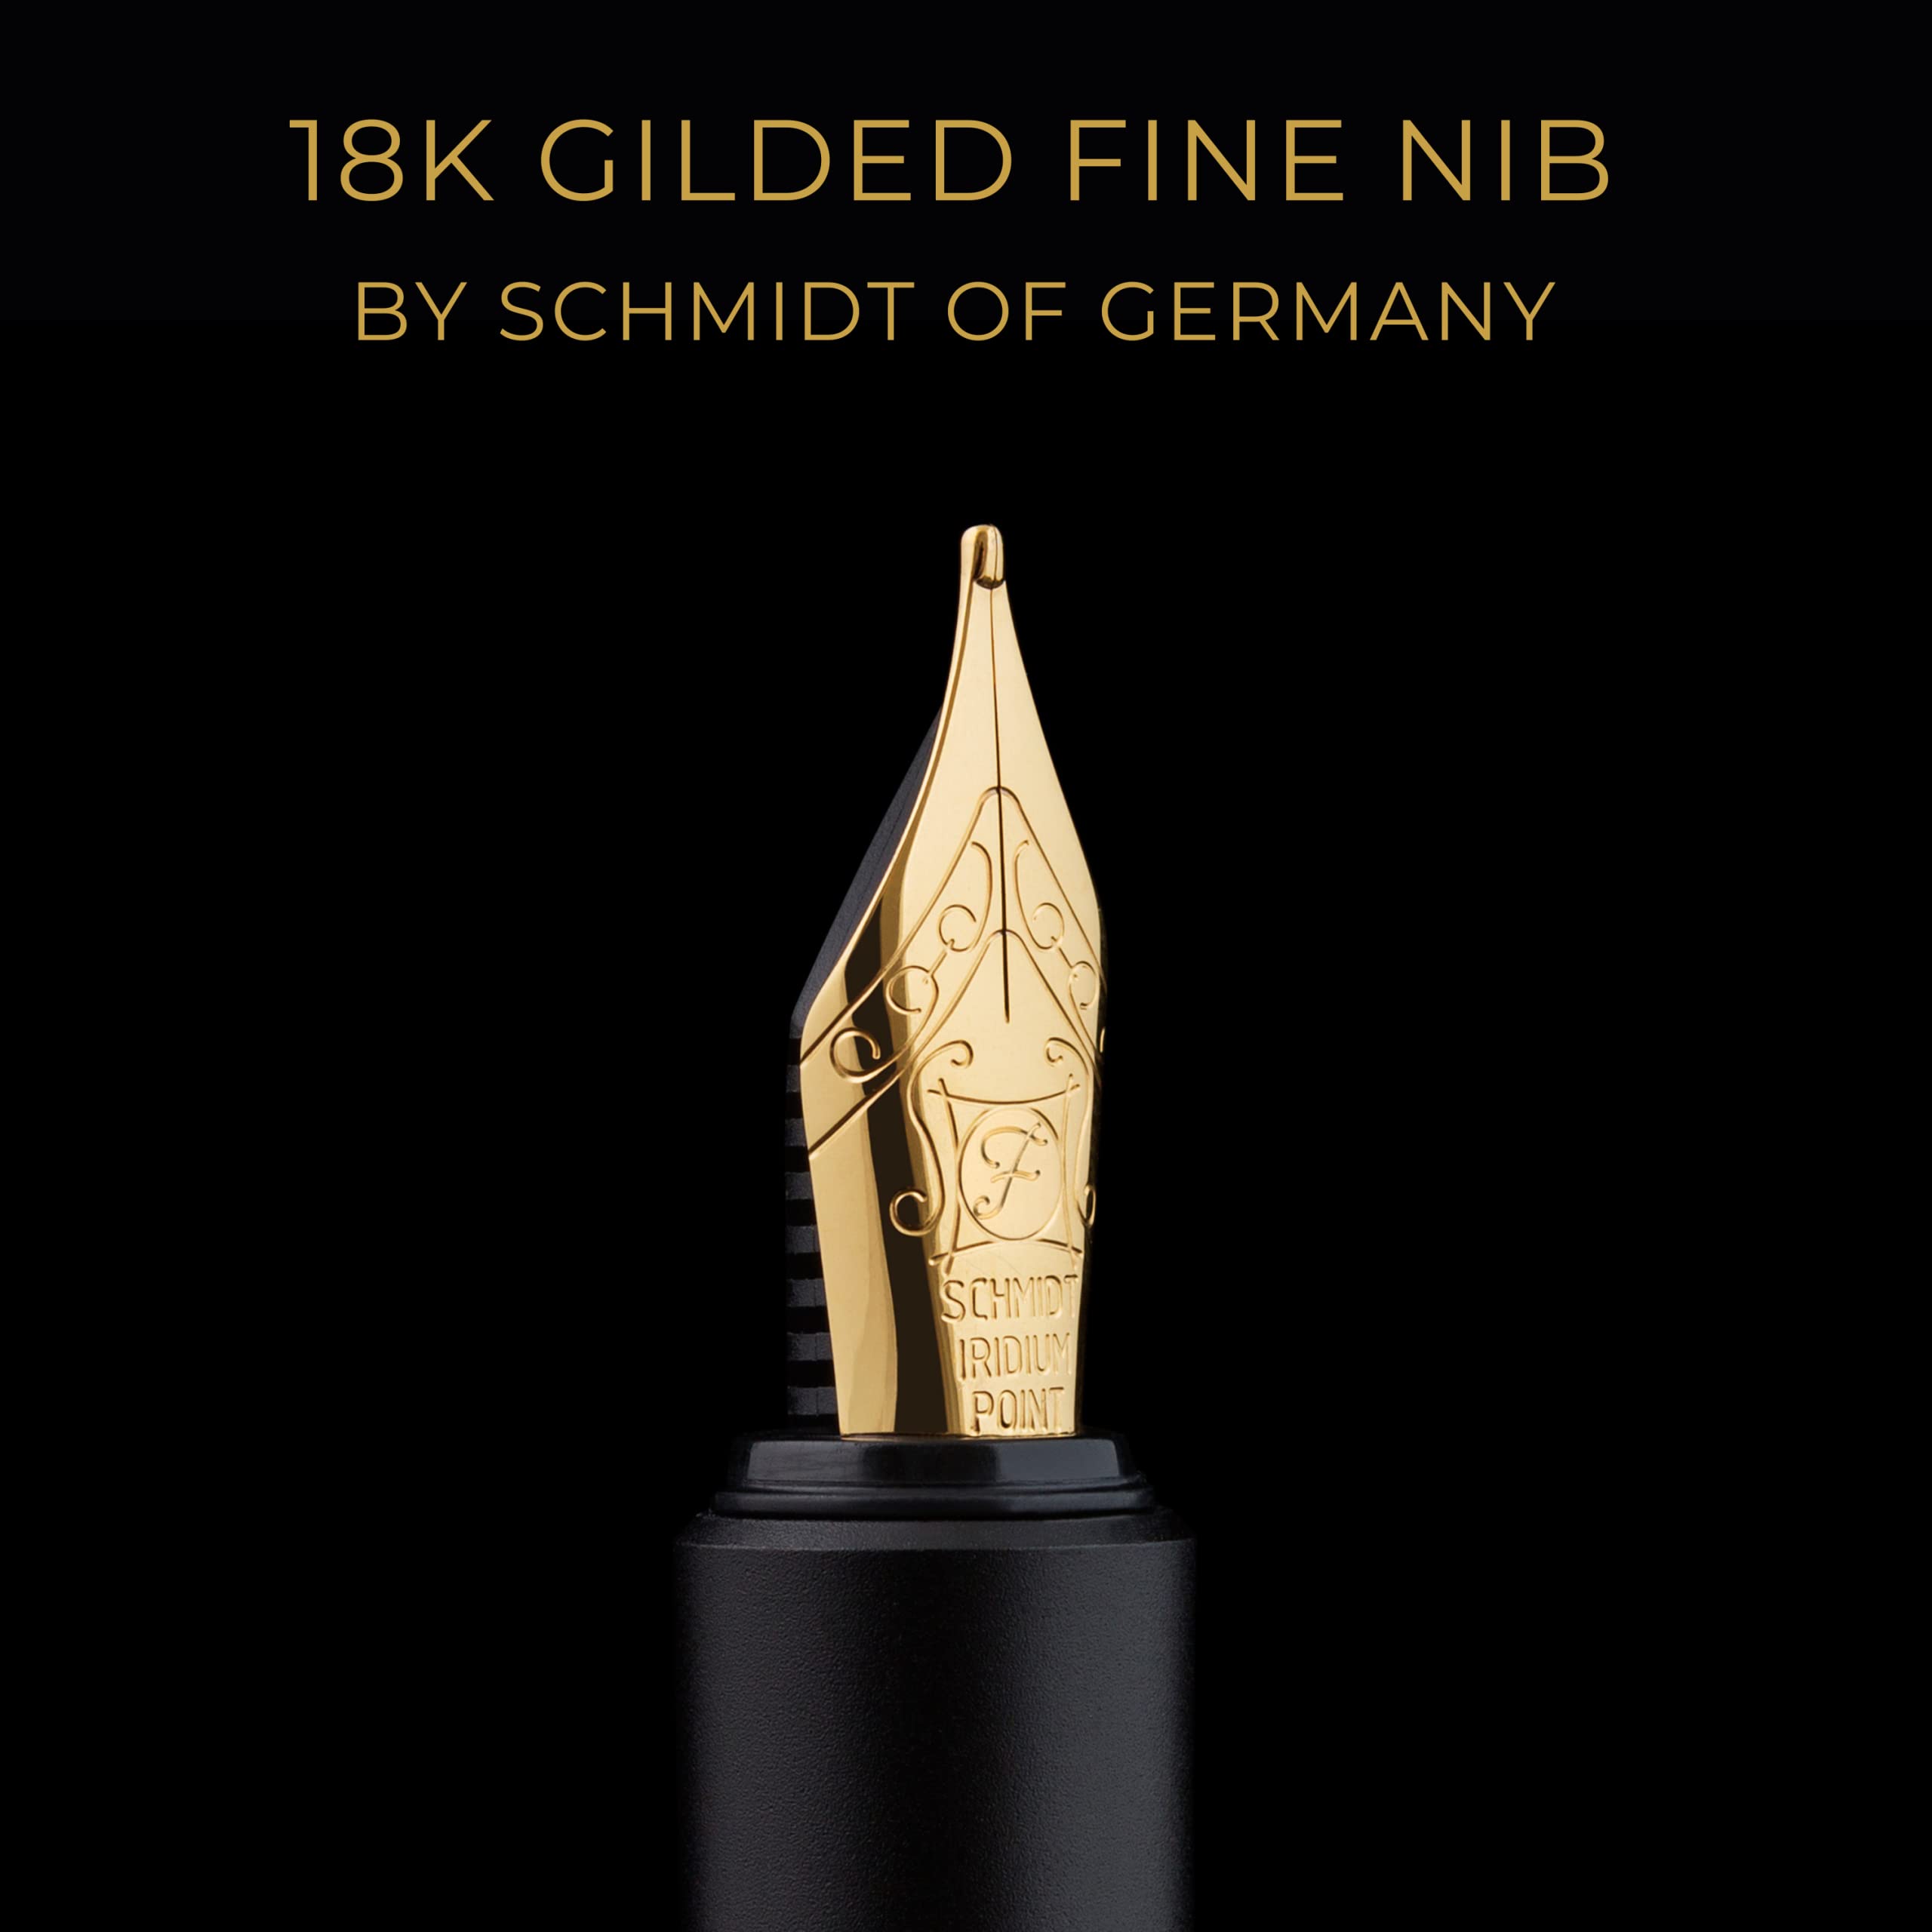 Scriveiner 最高級 プレミアム 万年筆 (黒) 魅力的な美しさ 24K金